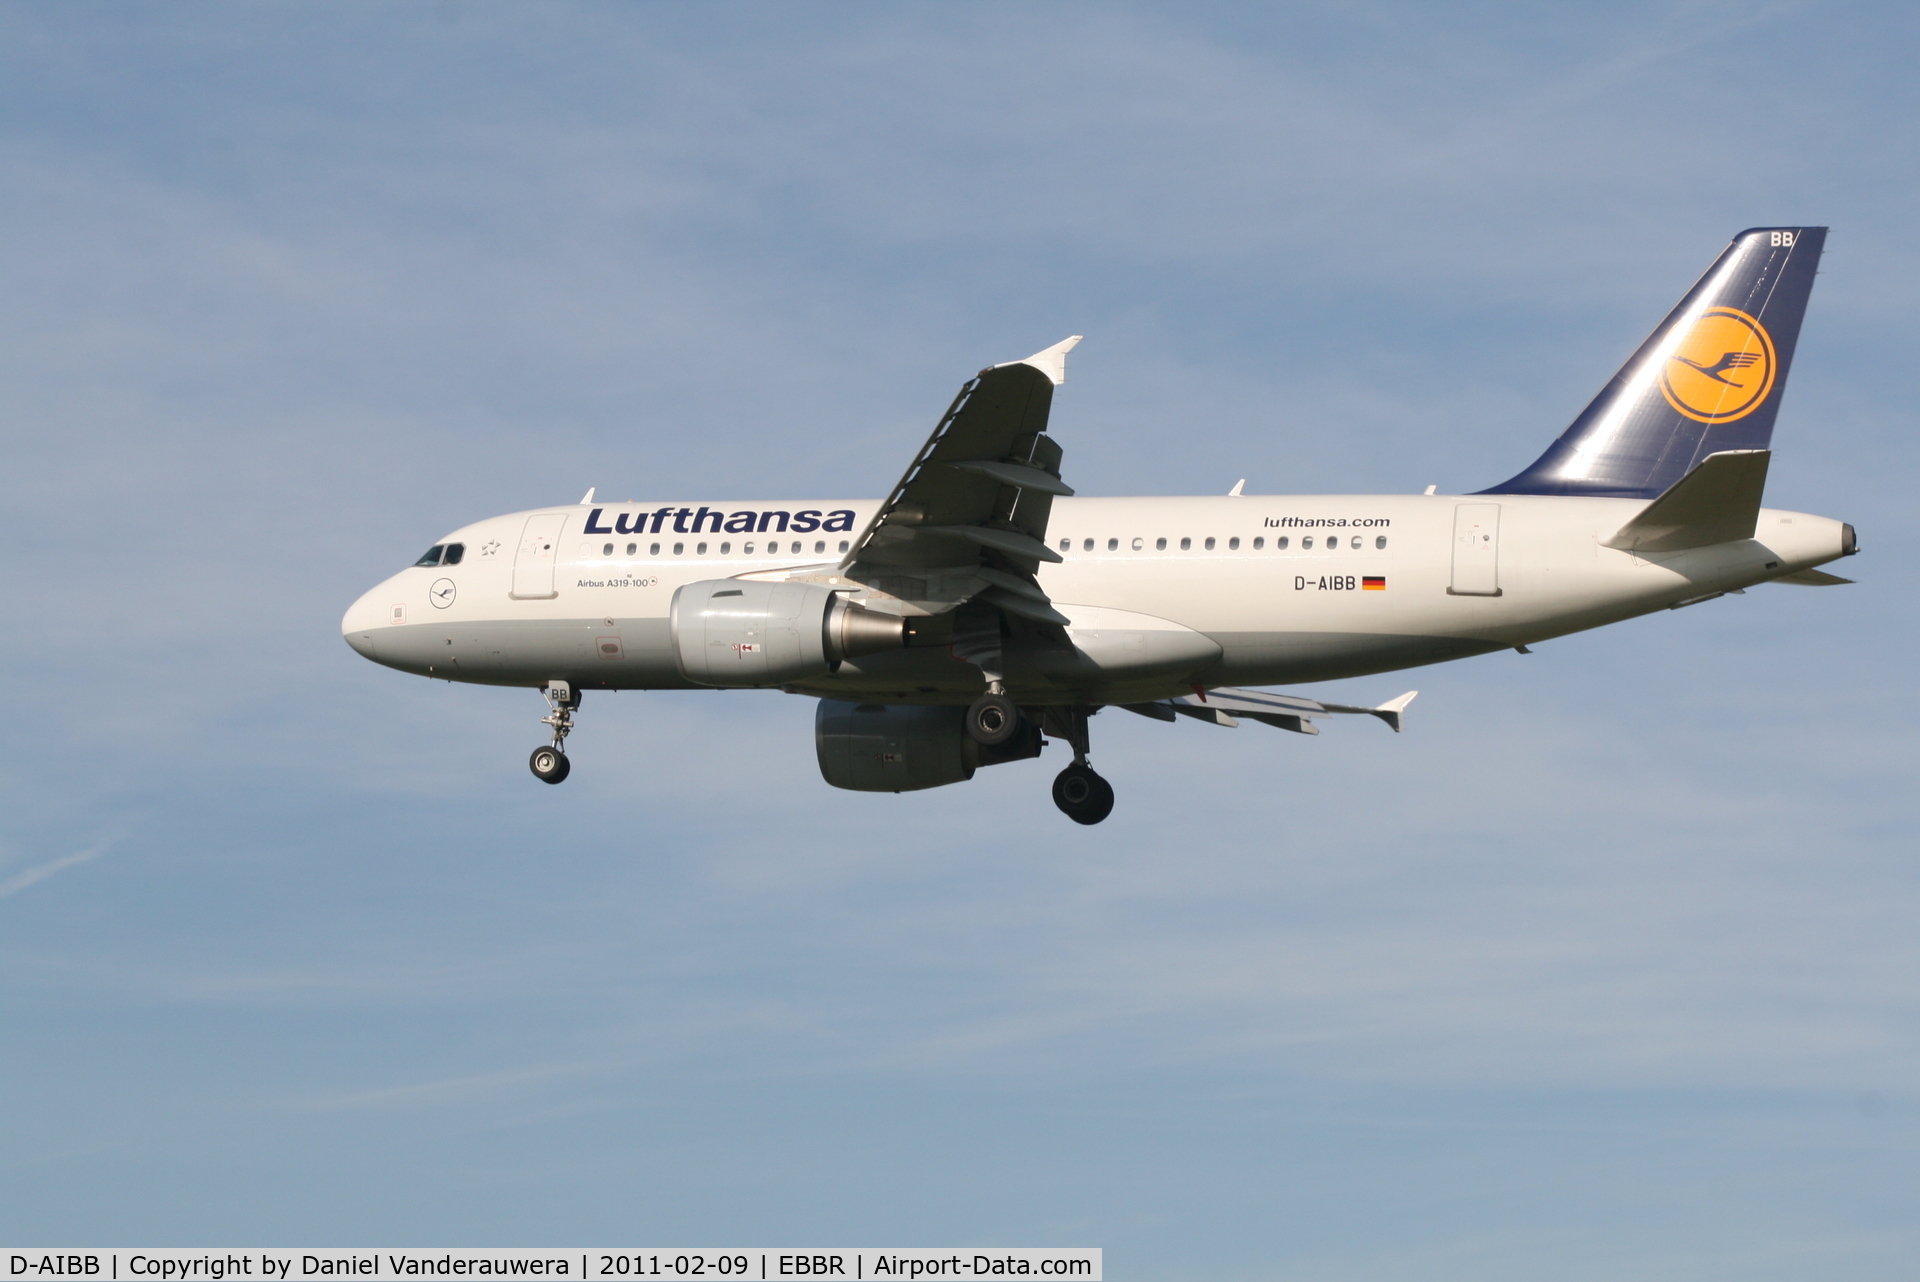 D-AIBB, 2010 Airbus A319-112 C/N 4182, Flight LH1010 is descending to RWY 25L